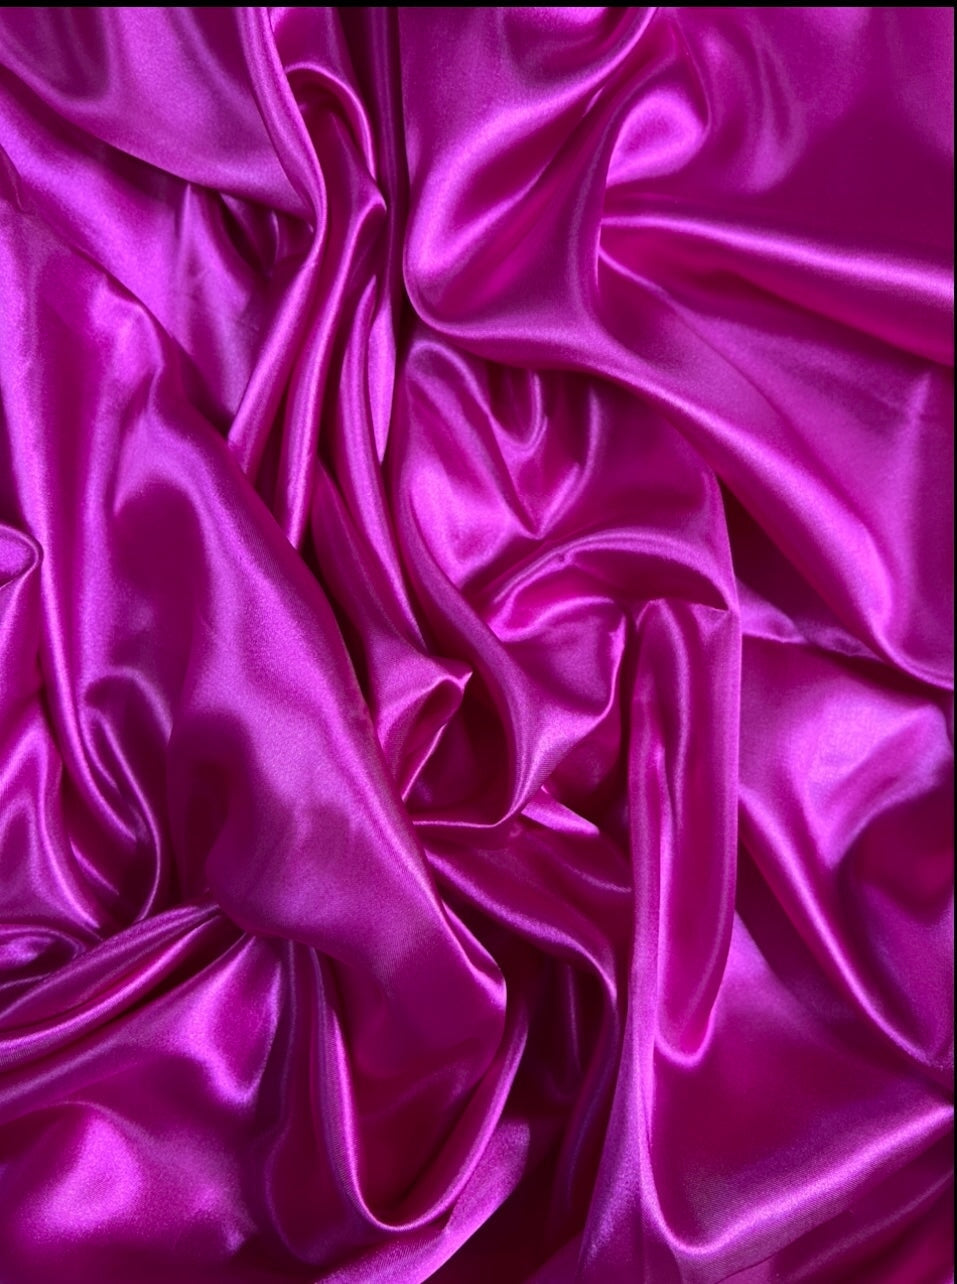 fuchsia satin, hot pink satin, pink satin, burgundy satin, kikitextiles,online satin store, luxury fabric online, fuchsia fabric online, fuchsia color for bridal dress